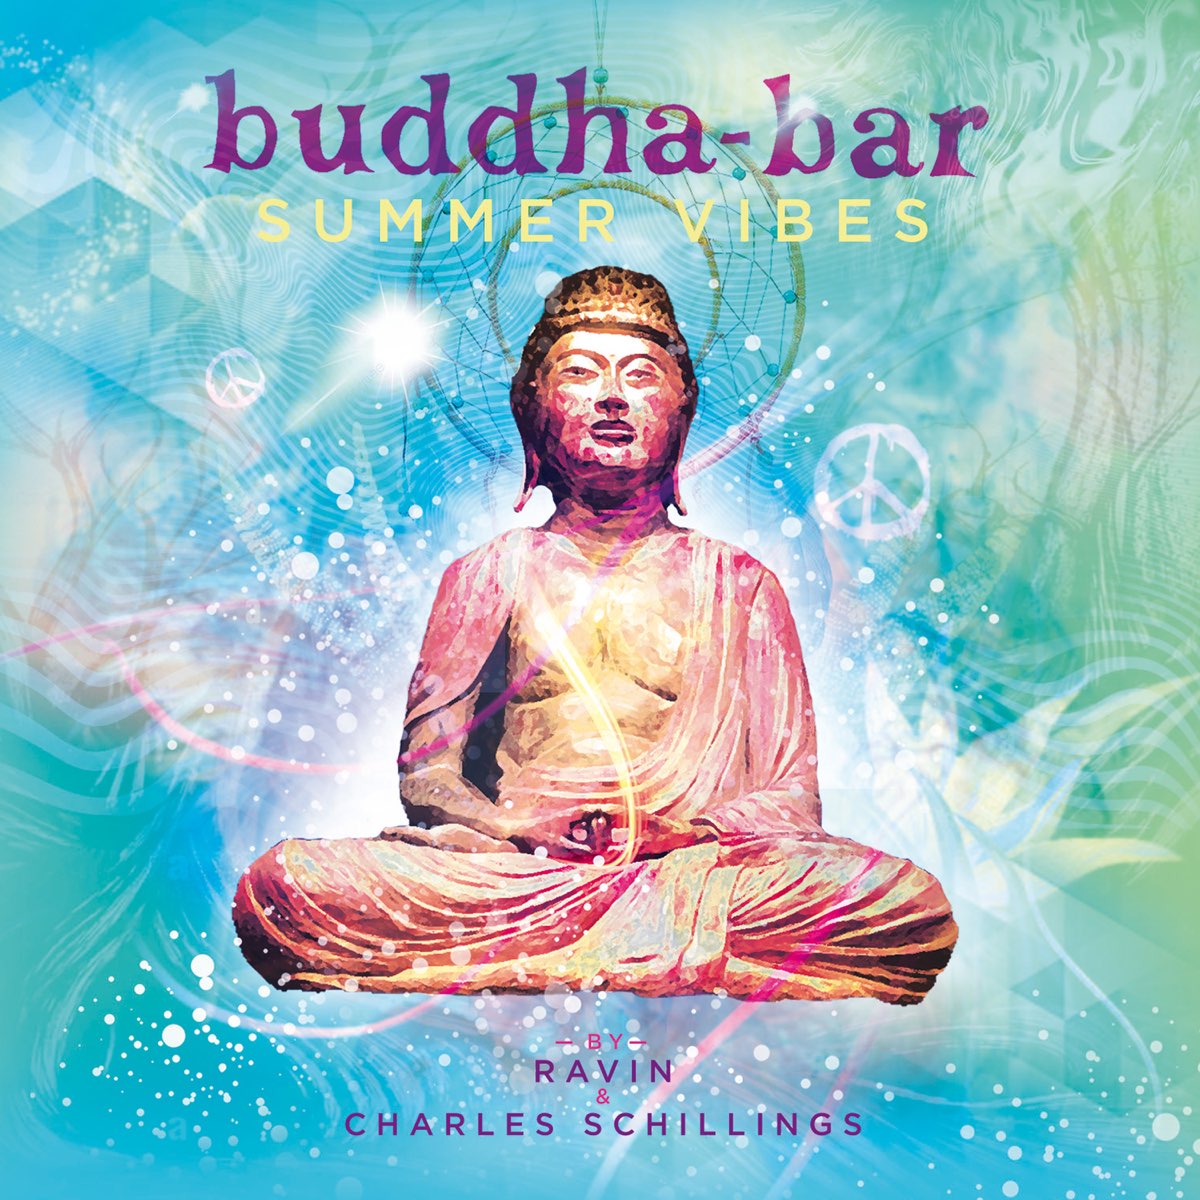 Buddha Bar Summer Vibes (by Ravin & Charles Schillings) by Buddha Bar on  Apple Music